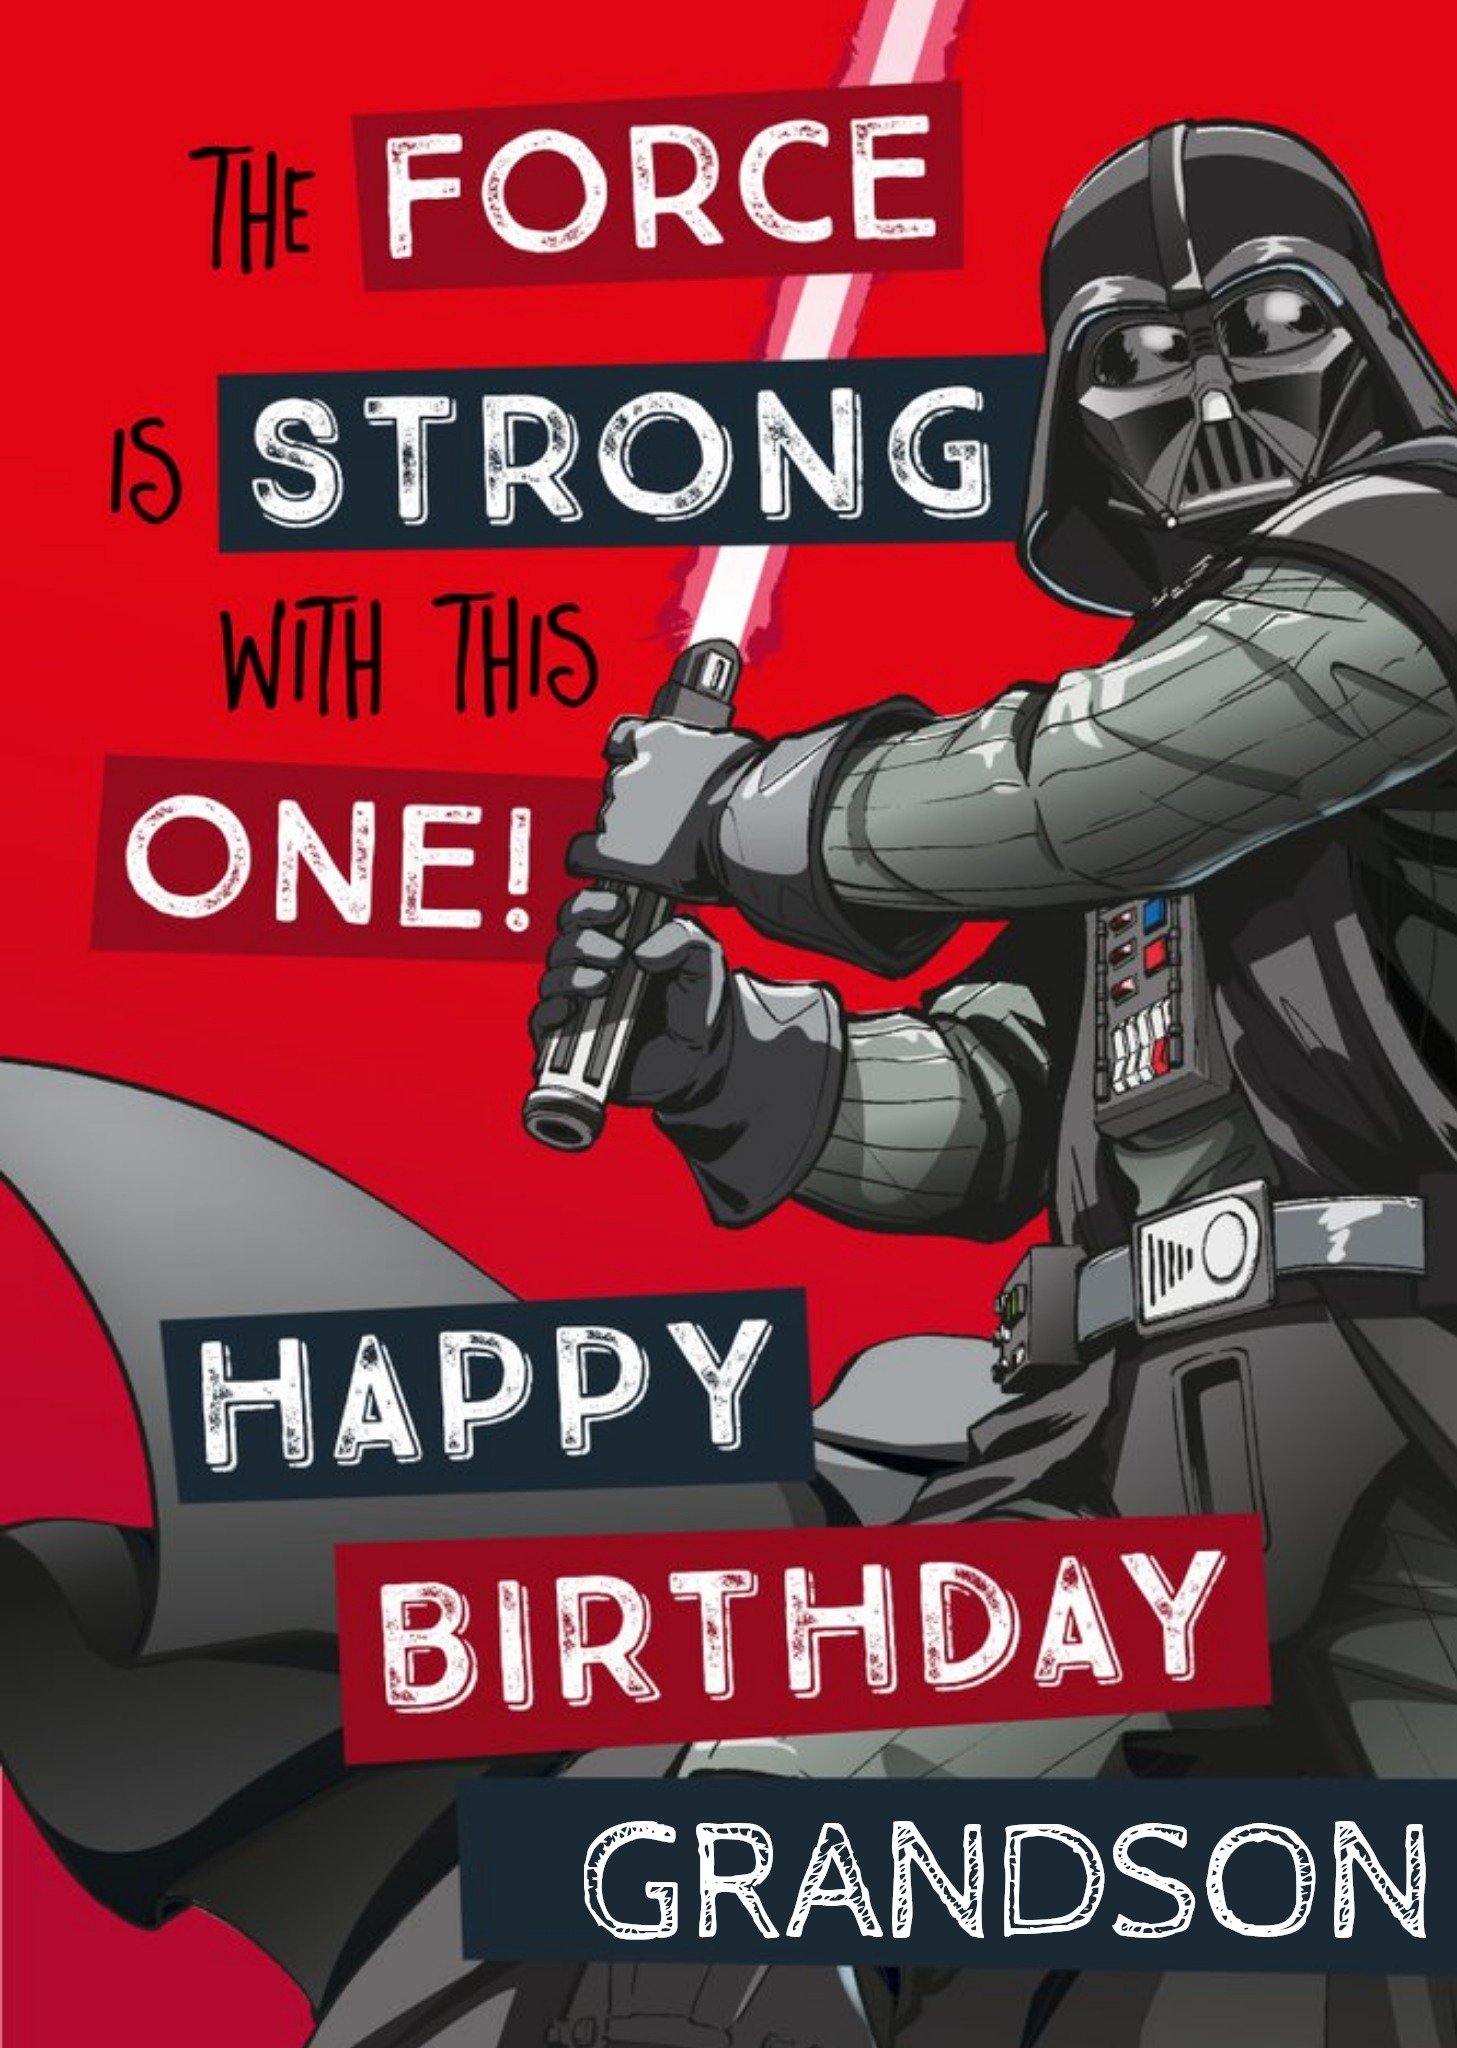 Disney Star Wars Grandson Birthday Card - Darth Vader - The Force Is Strong Ecard